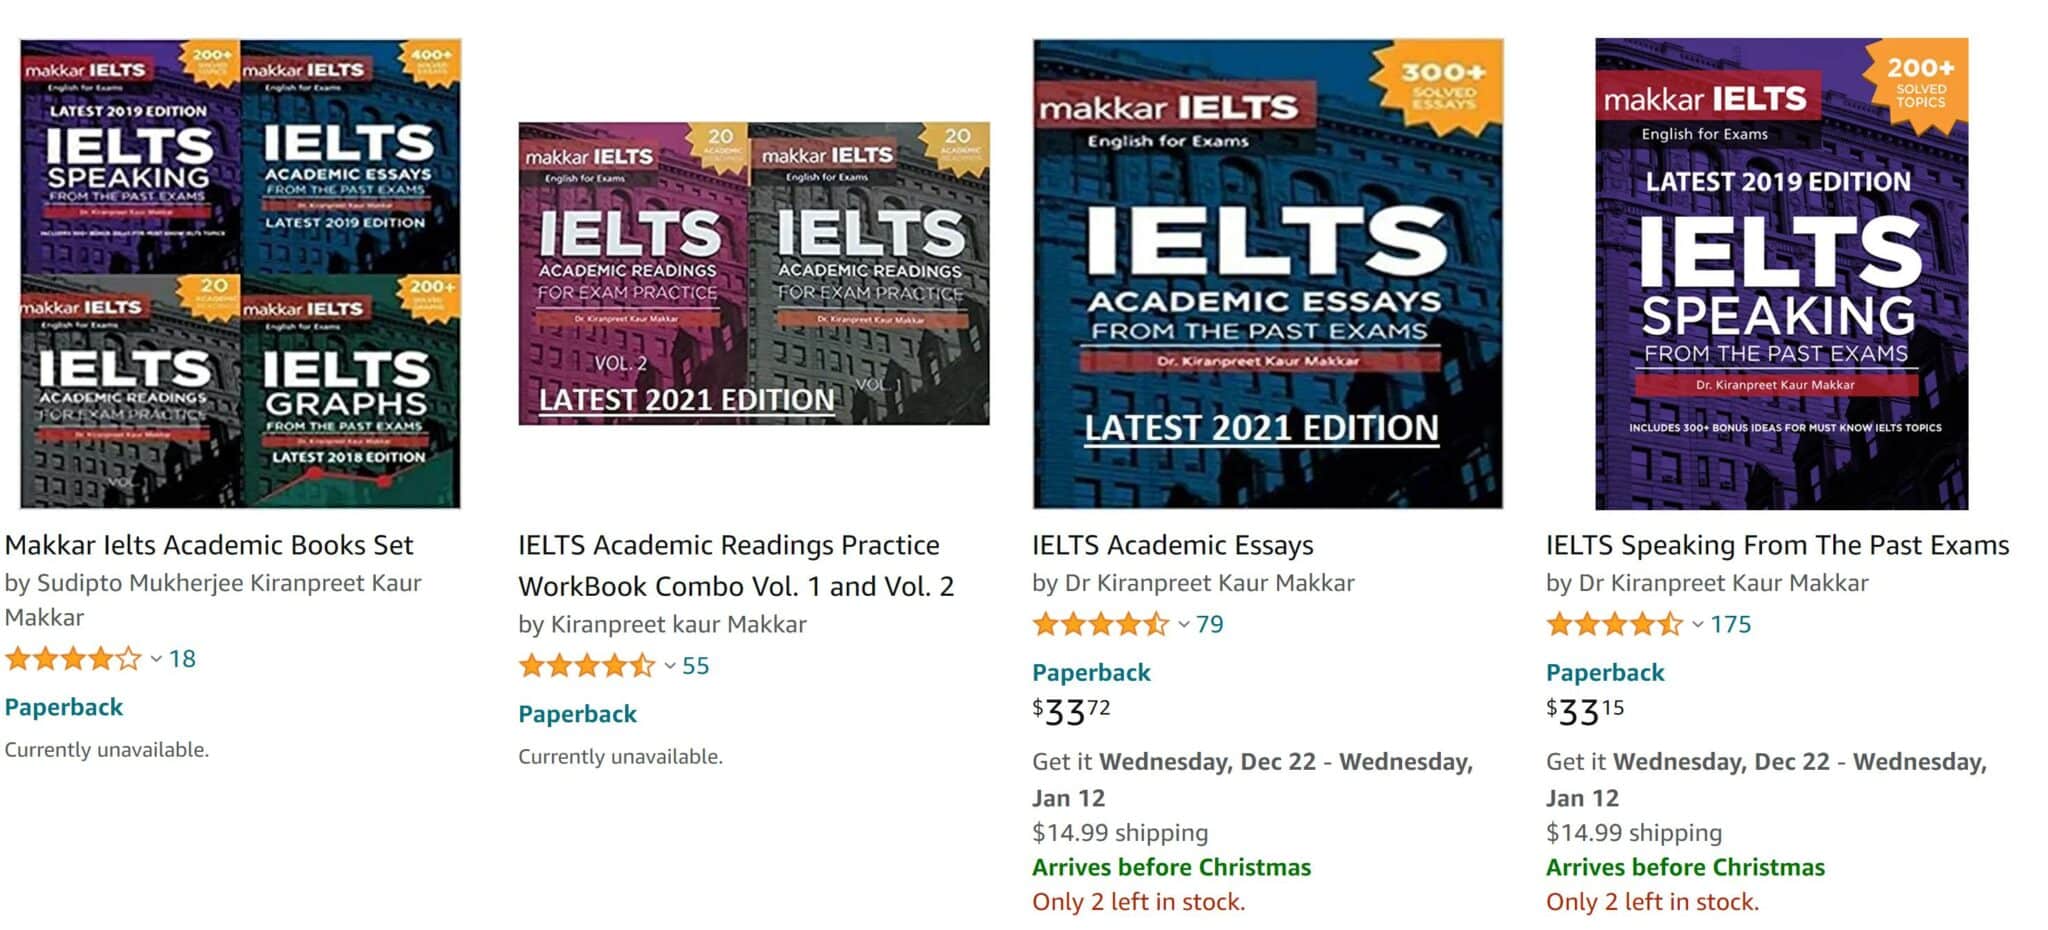 IELTS Preparation Book Review Of "Makkar IELTS Guides And Books"